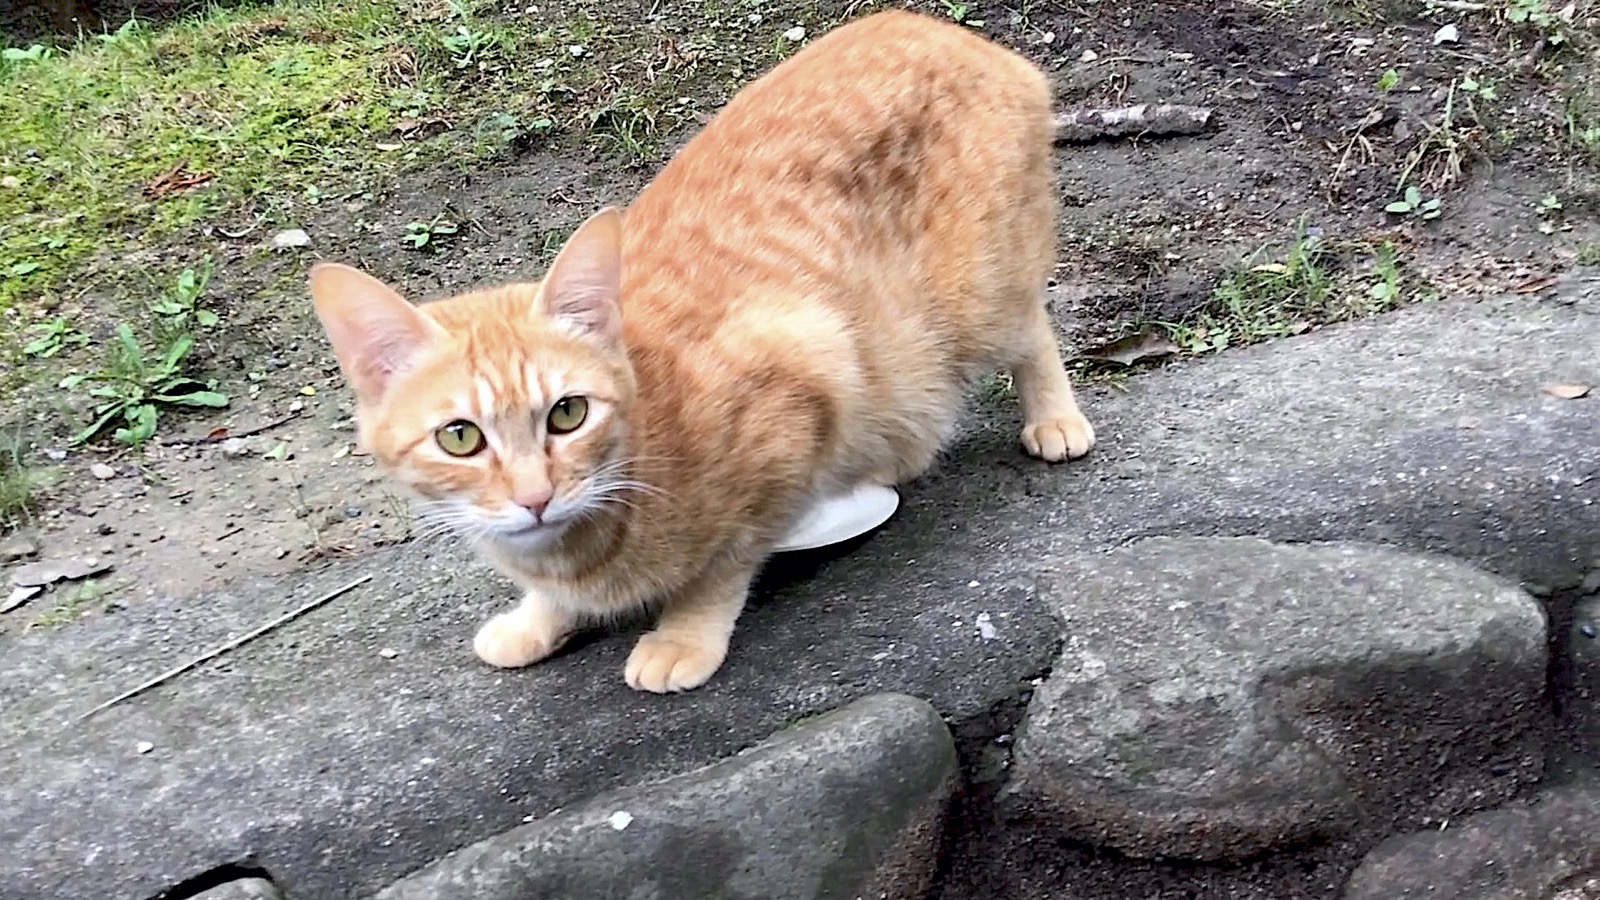 A cute orange tabby kitten I saw you on the promenade